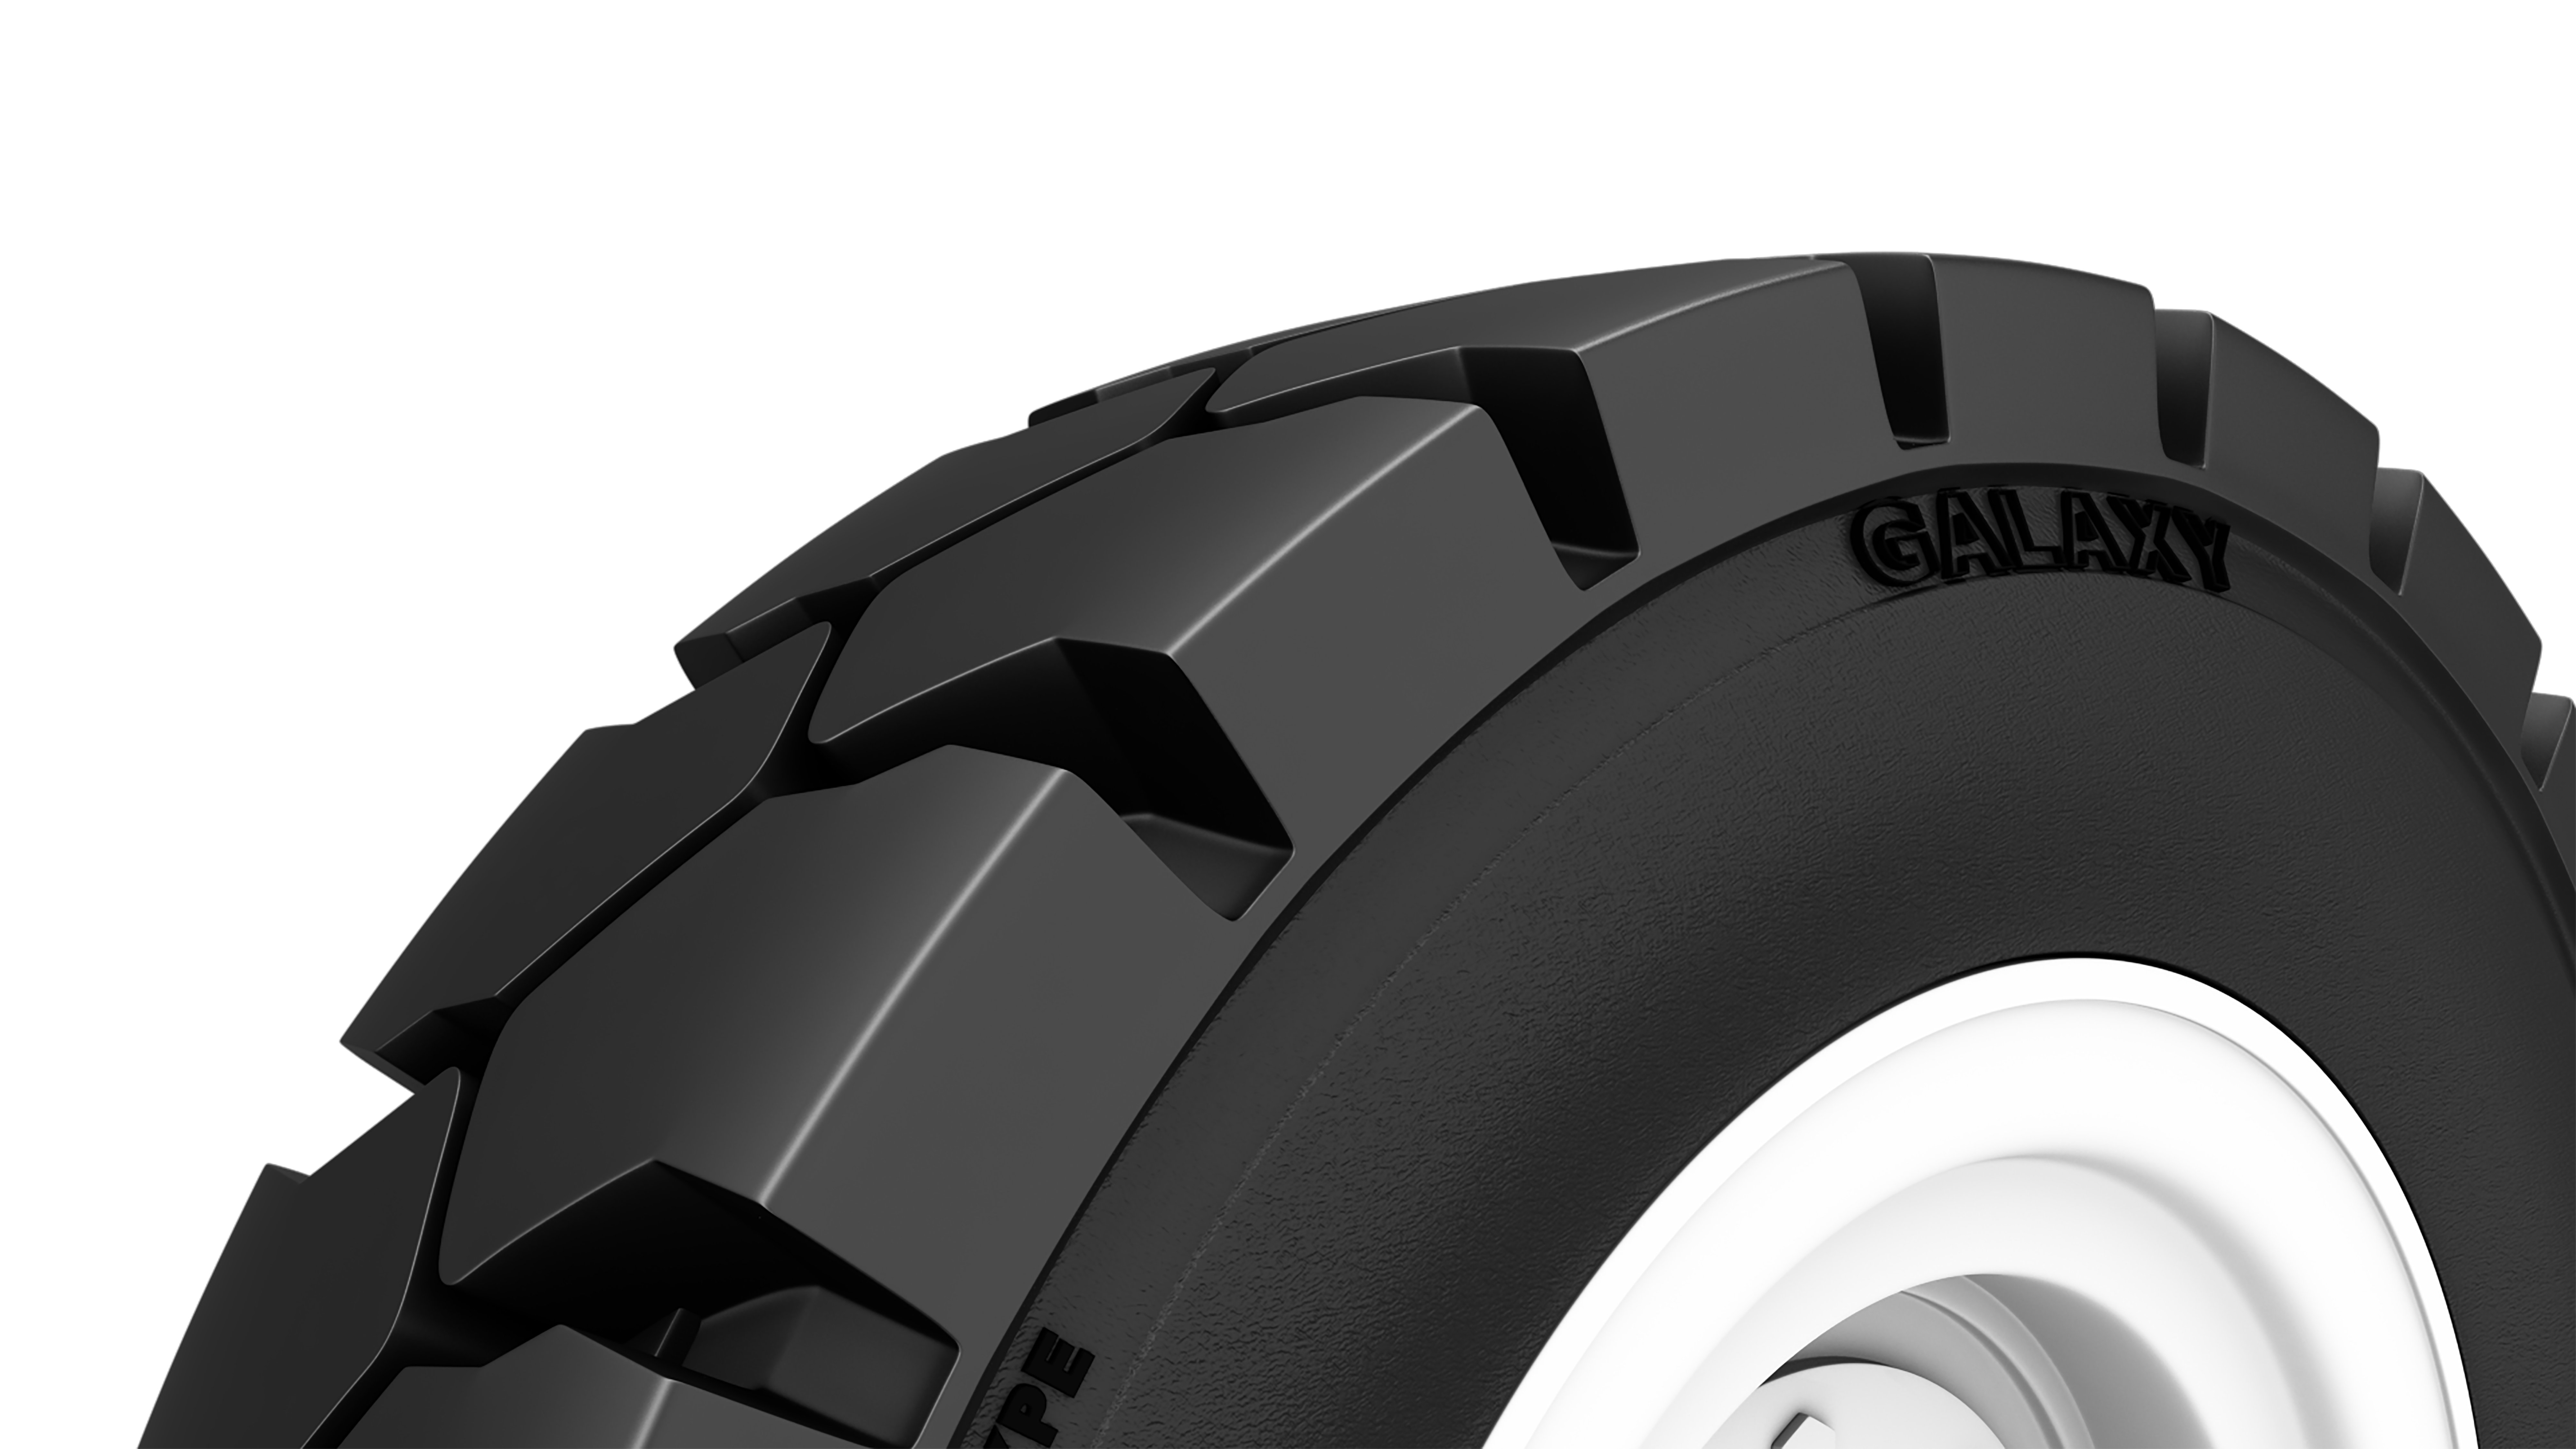 YardMaster Ultra GALAXY MATERIAL HANDLING Tire